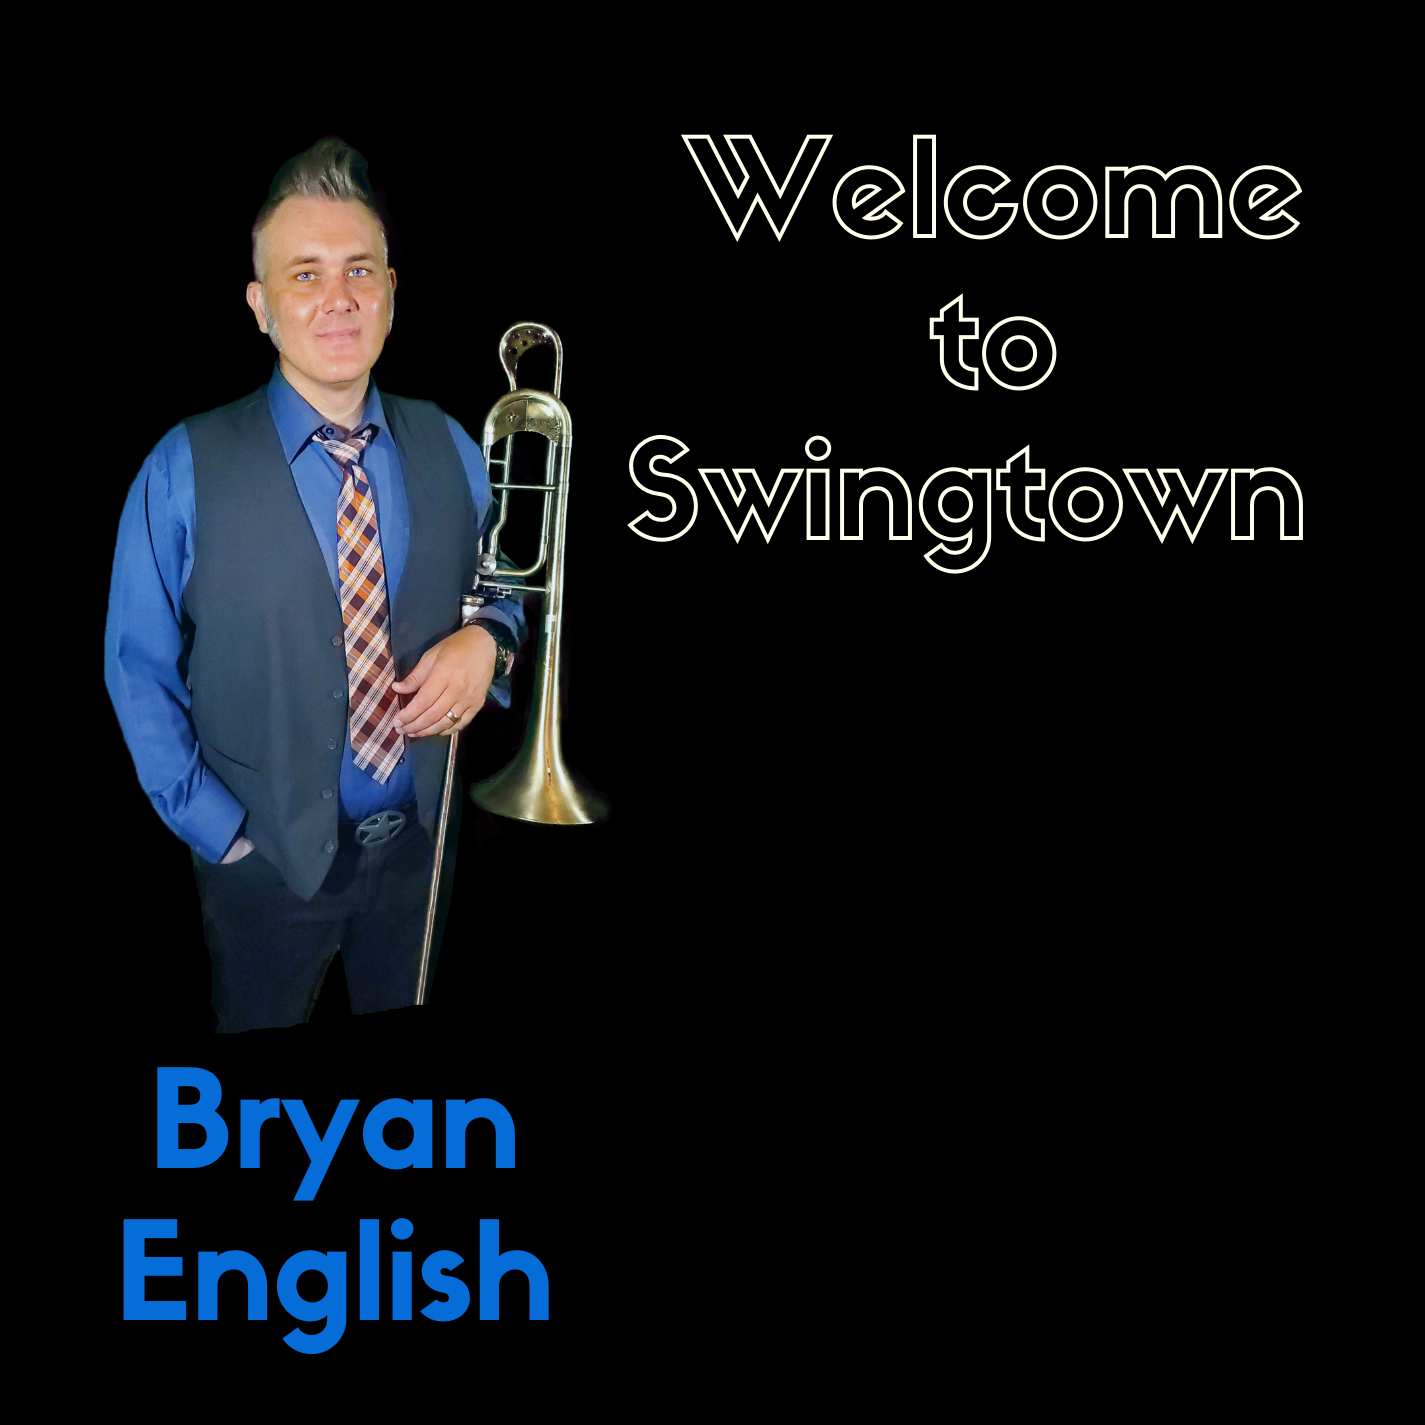 "Welcome to Swingtown" CD